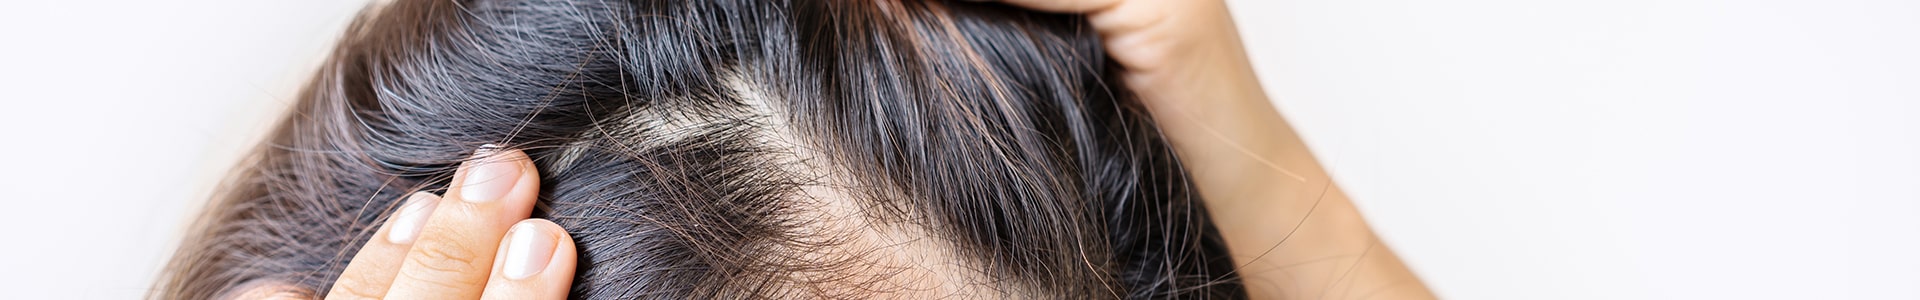 12 Common ARTAS Hair Transplant Myths